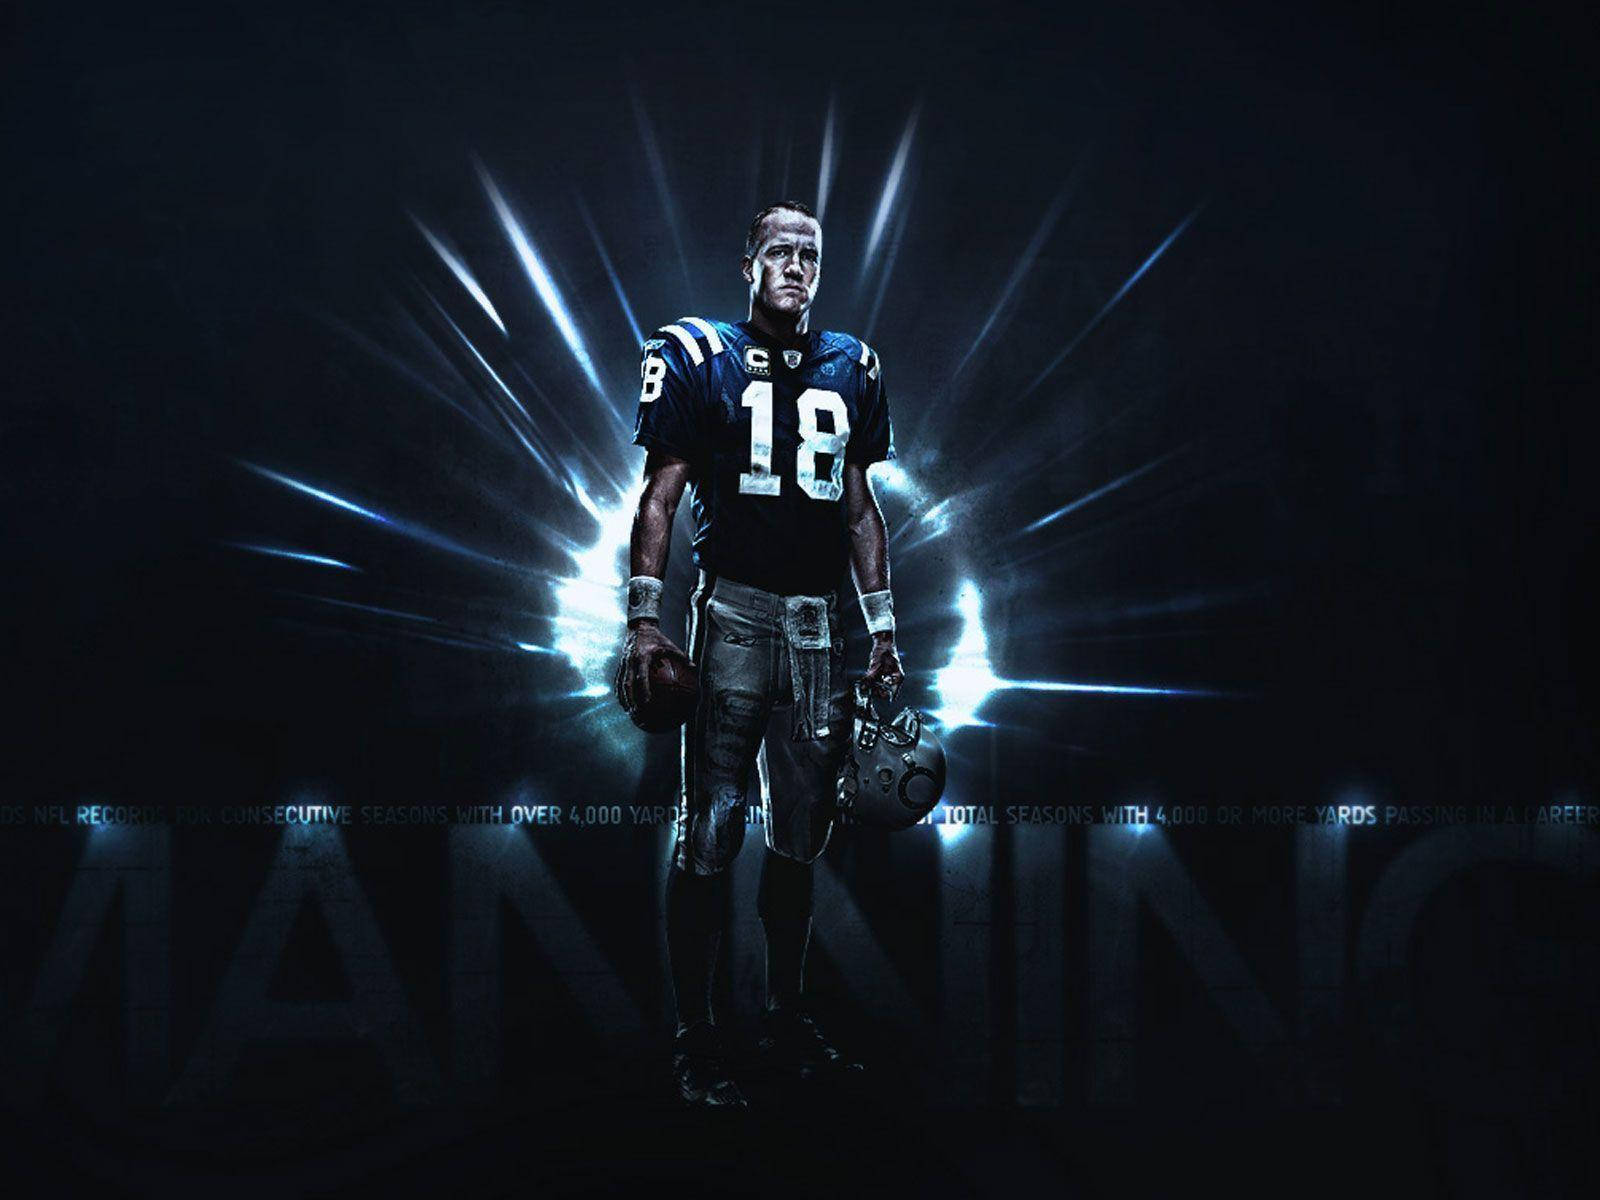 Nfl Football Player Peyton Manning Background